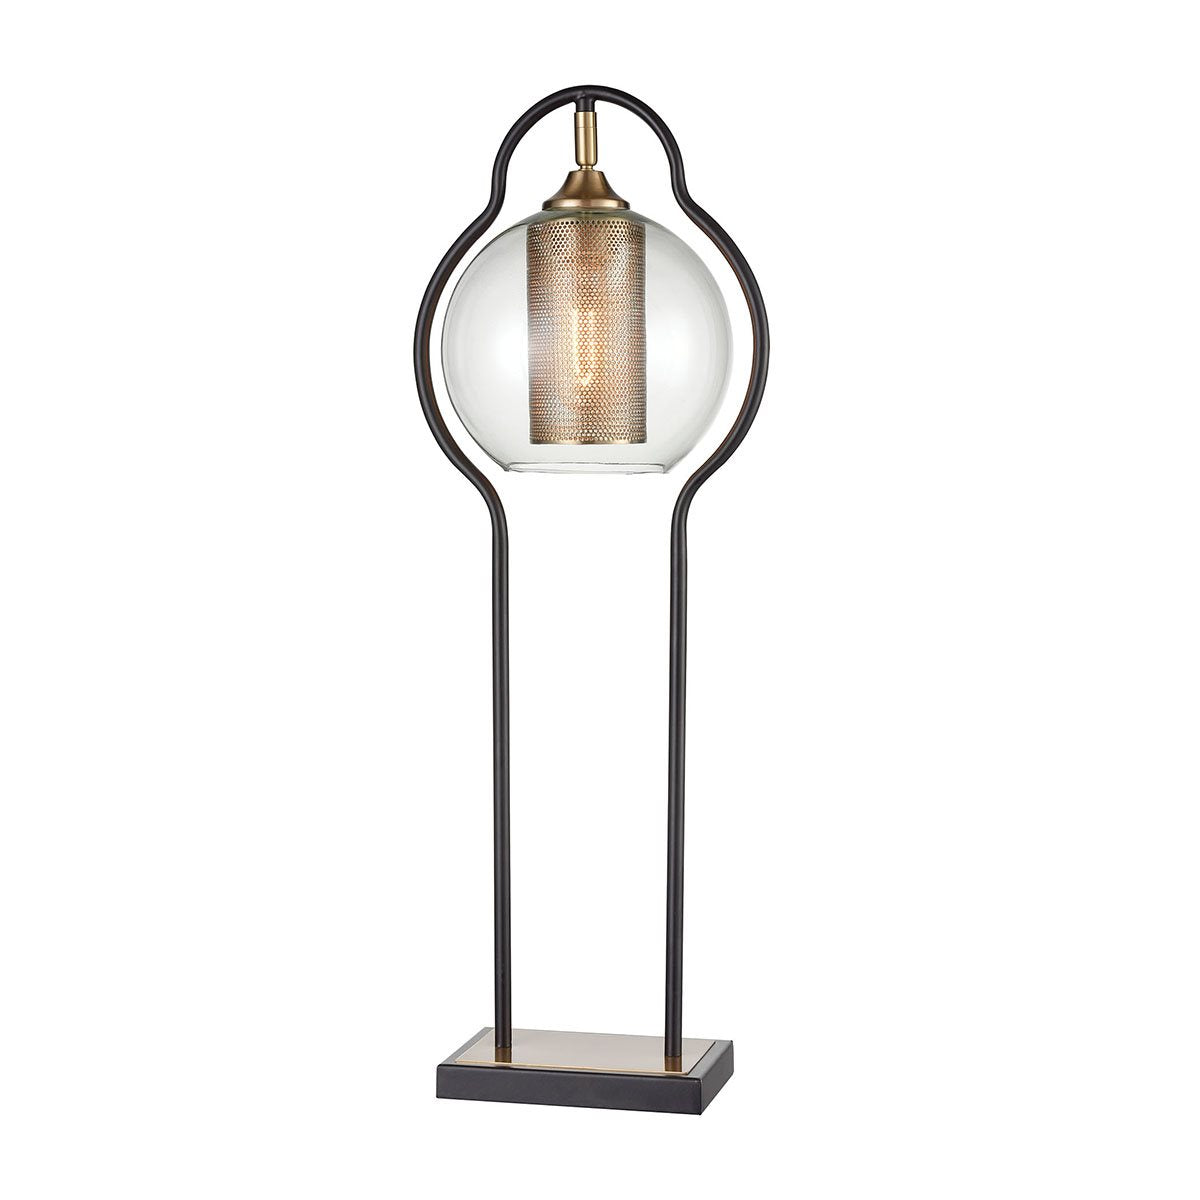 Stein World Bremington Table Lamp 77160